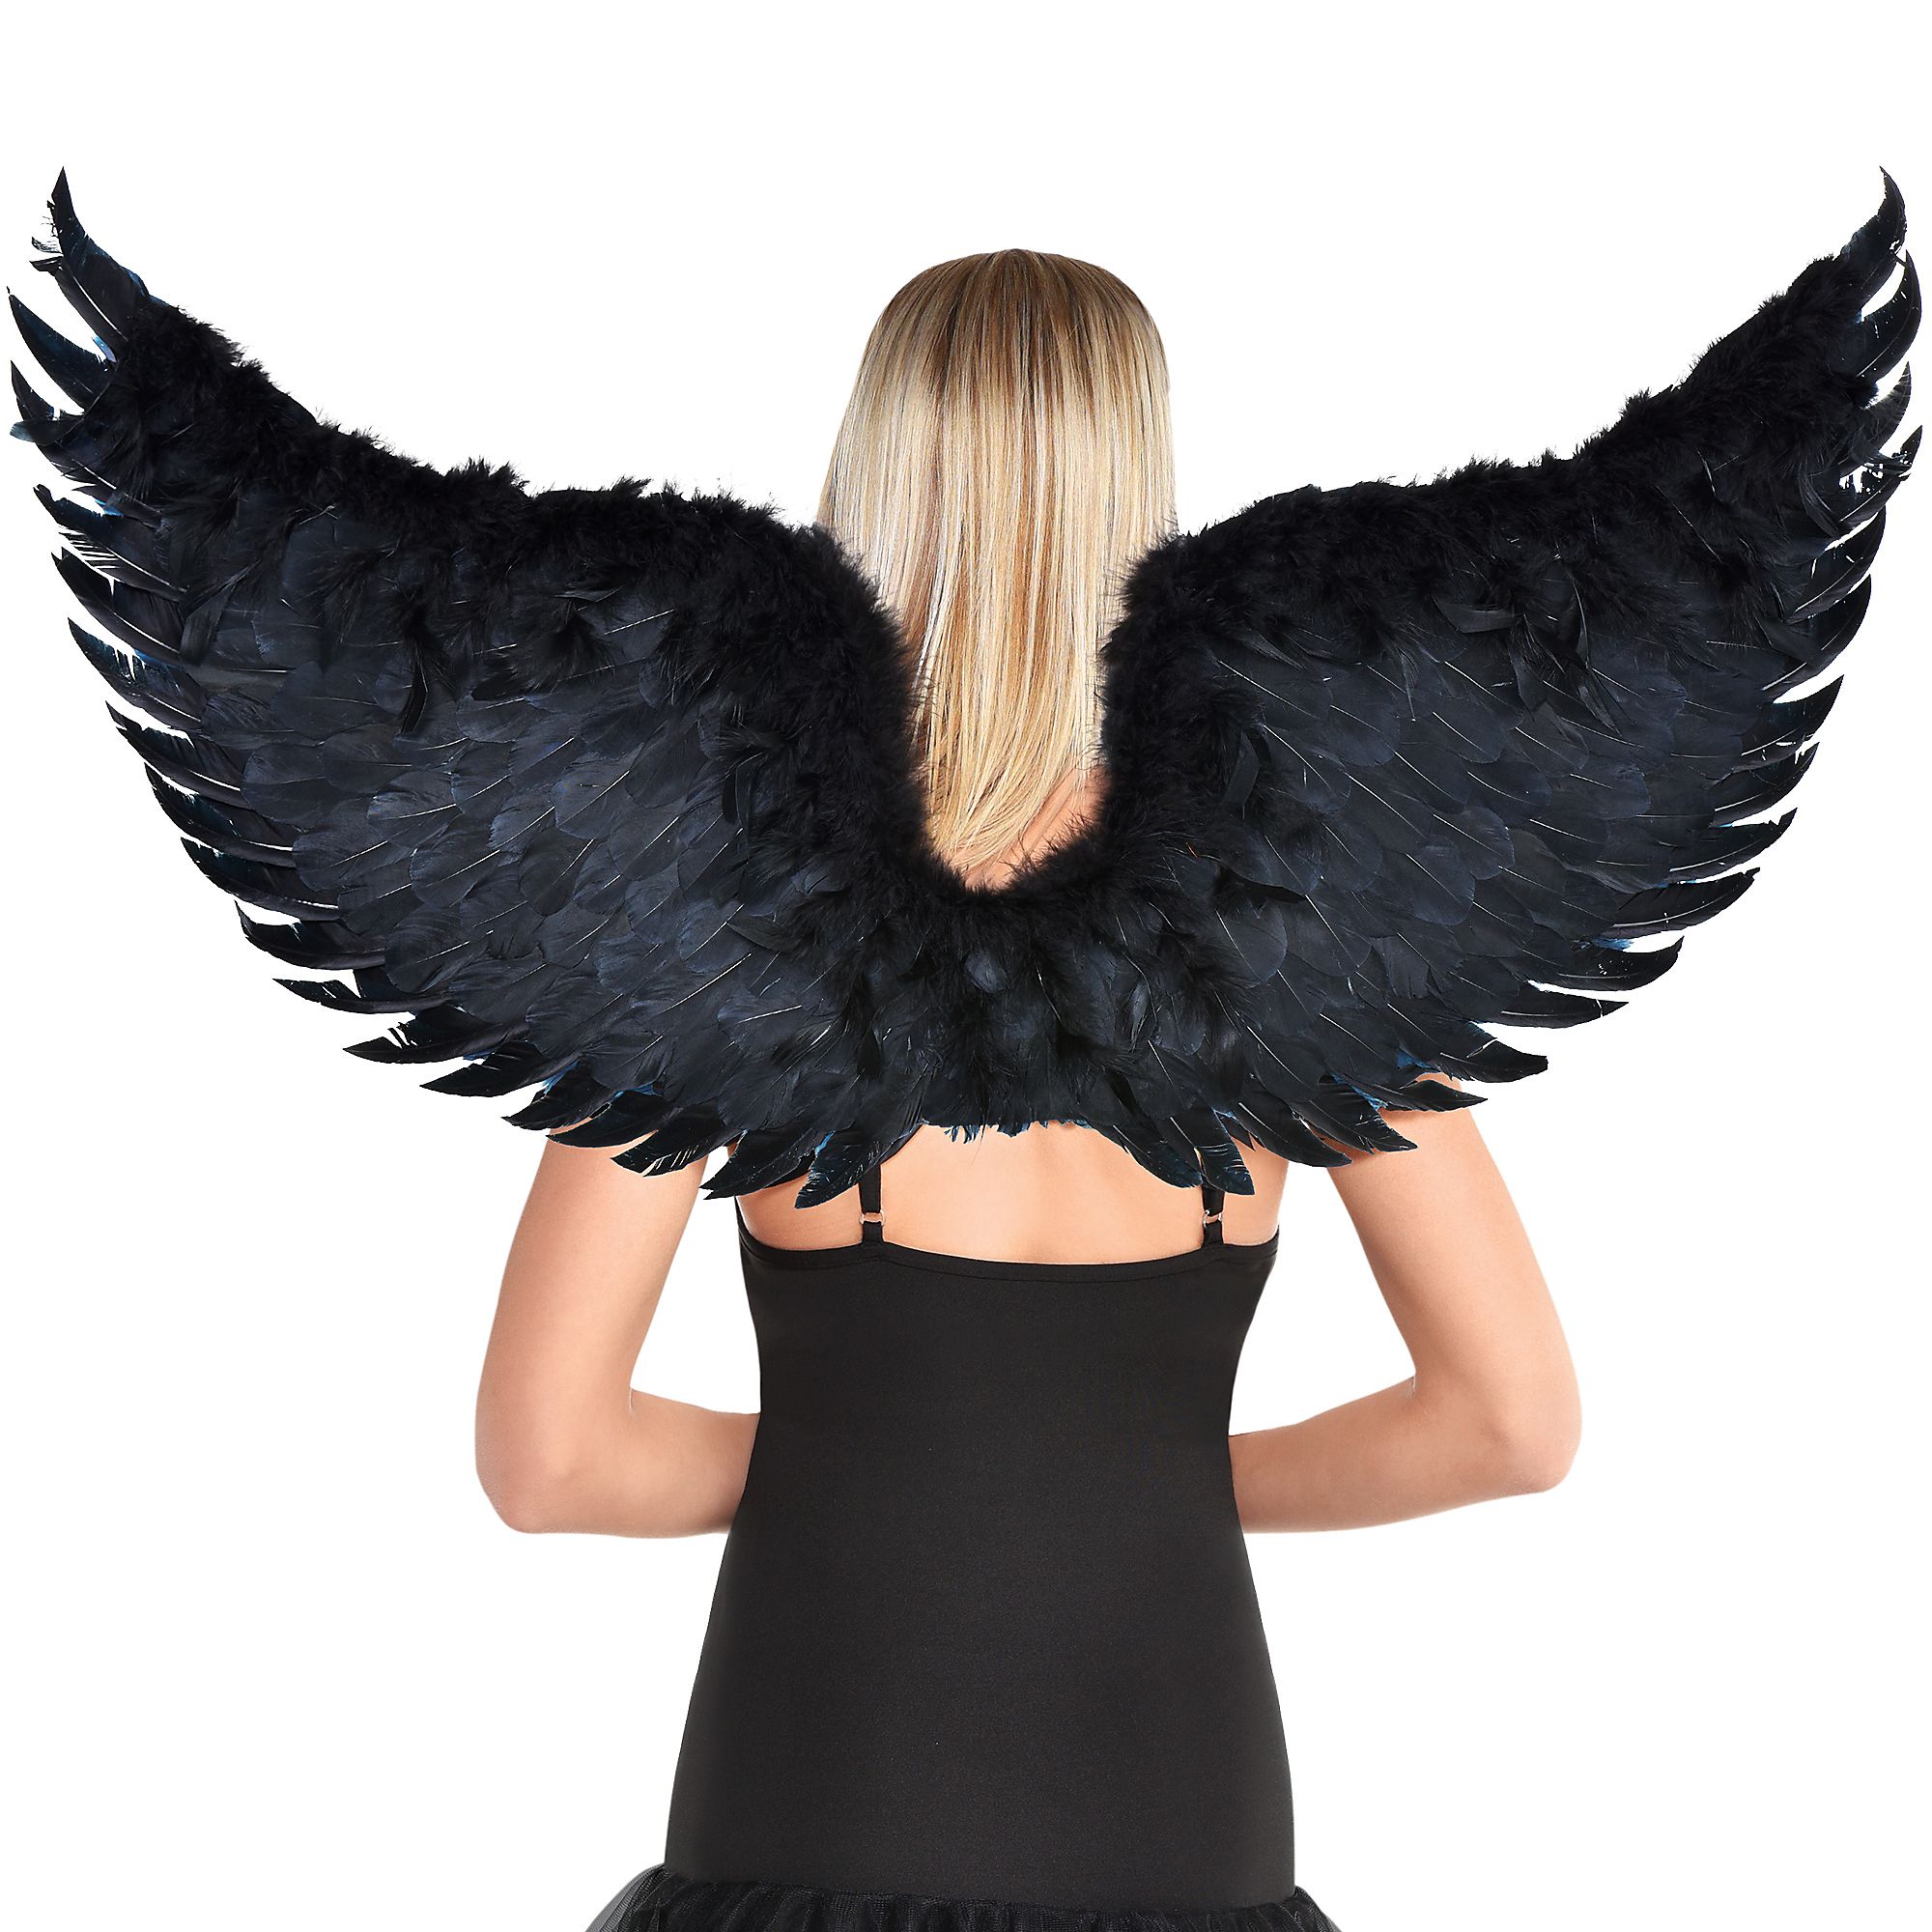 Dark Angel Wings Adult Halloween Costume Accessory One Size Ebay